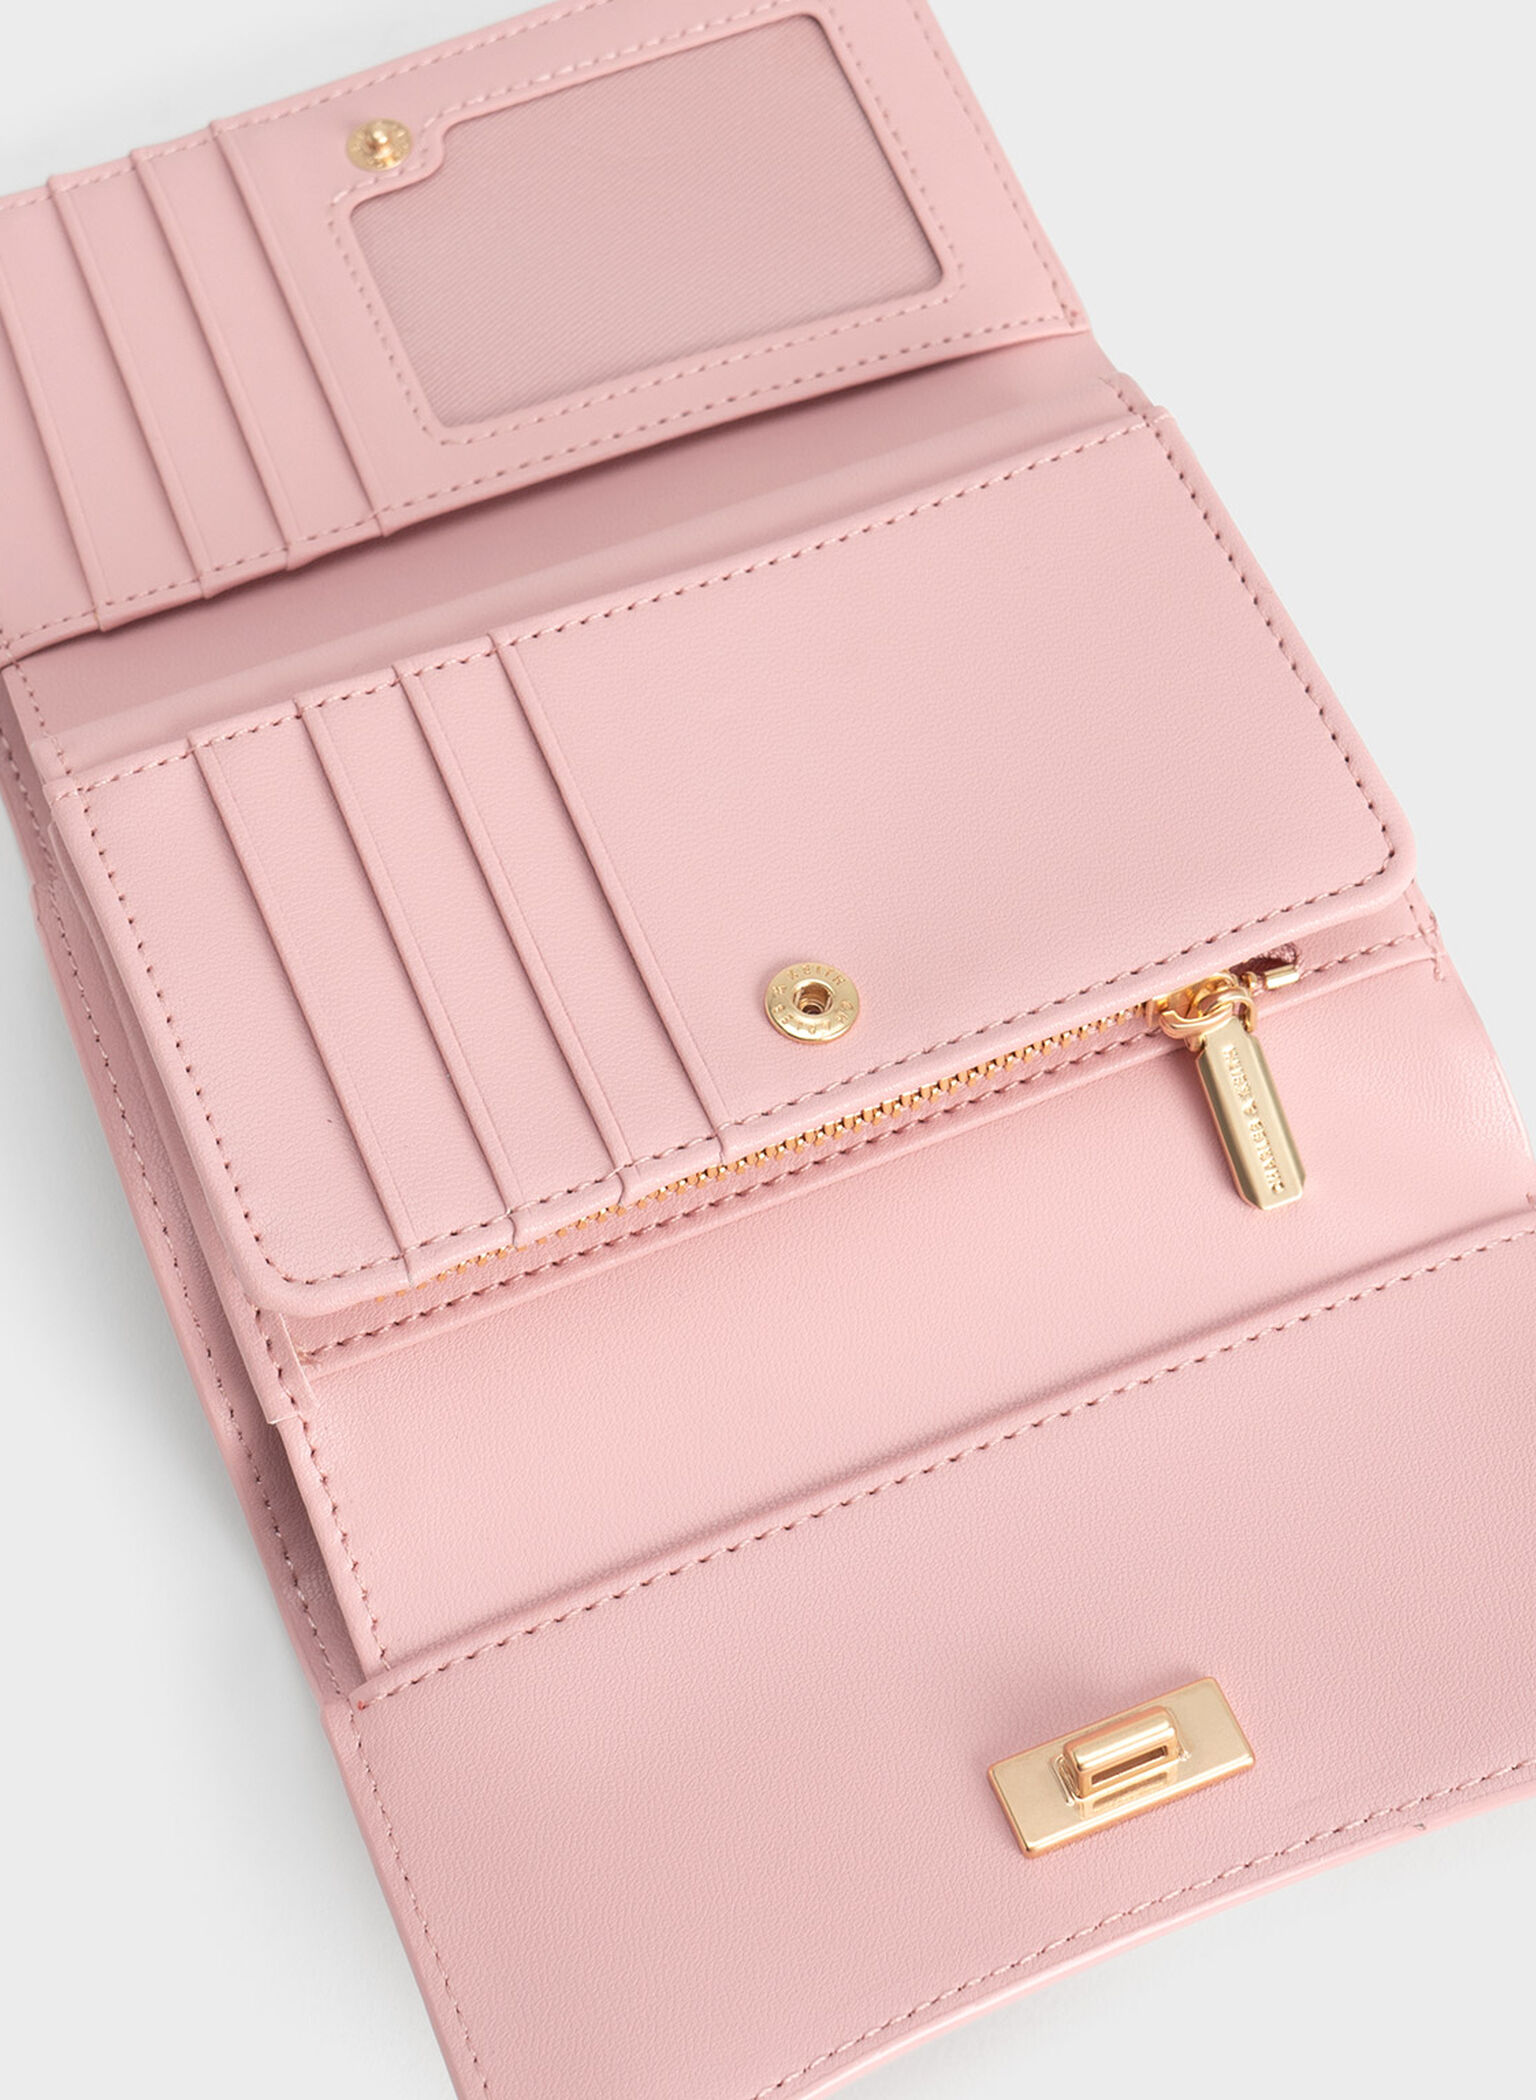 Huxley Metallic Accent Front Flap Wallet, Light Pink, hi-res